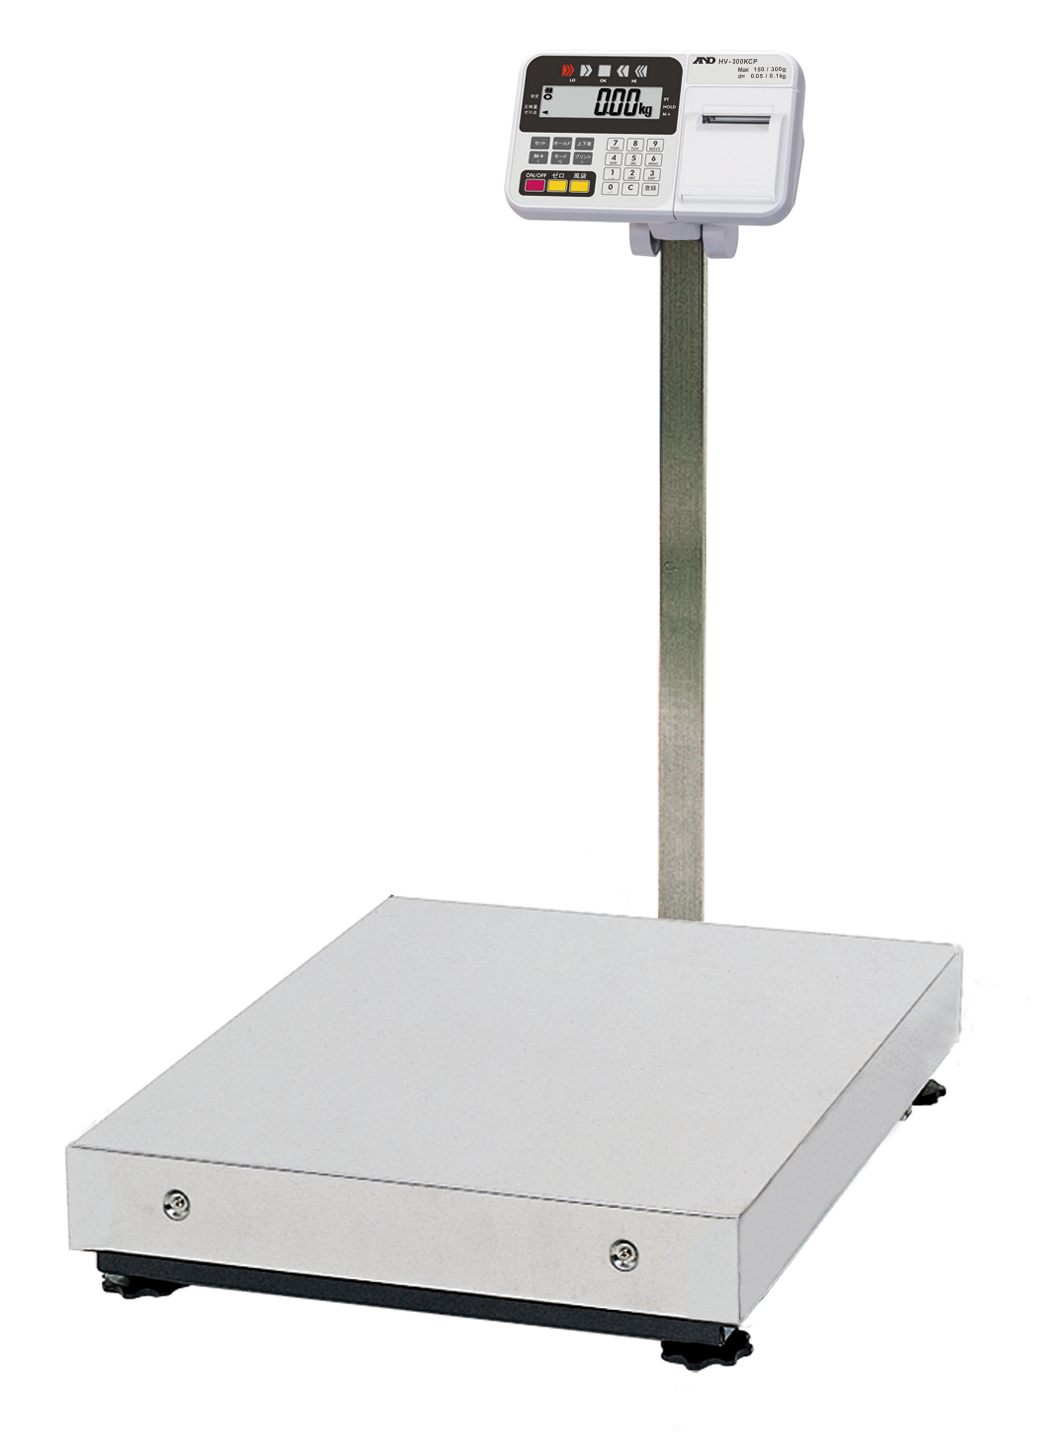 AD アナログ電圧出力（0-1Vまたは0.2-1V） GXM-06 - 計測工具